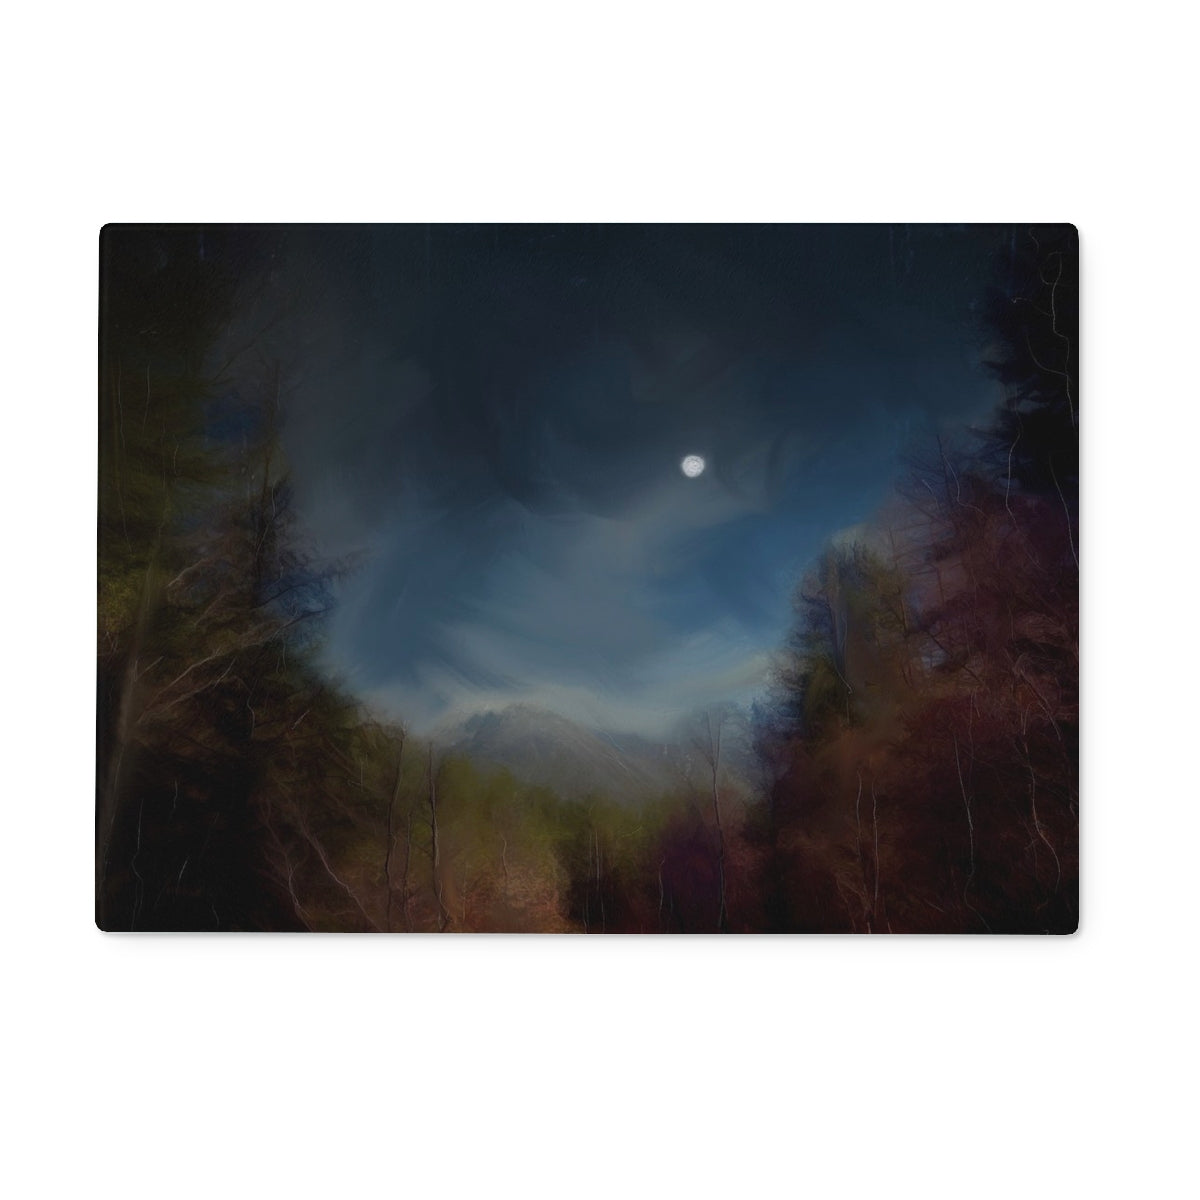 Glencoe Lochan Moonlight Art Gifts Glass Chopping Board-Glass Chopping Boards-Scottish Lochs & Mountains Art Gallery-15"x11" Rectangular-Paintings, Prints, Homeware, Art Gifts From Scotland By Scottish Artist Kevin Hunter